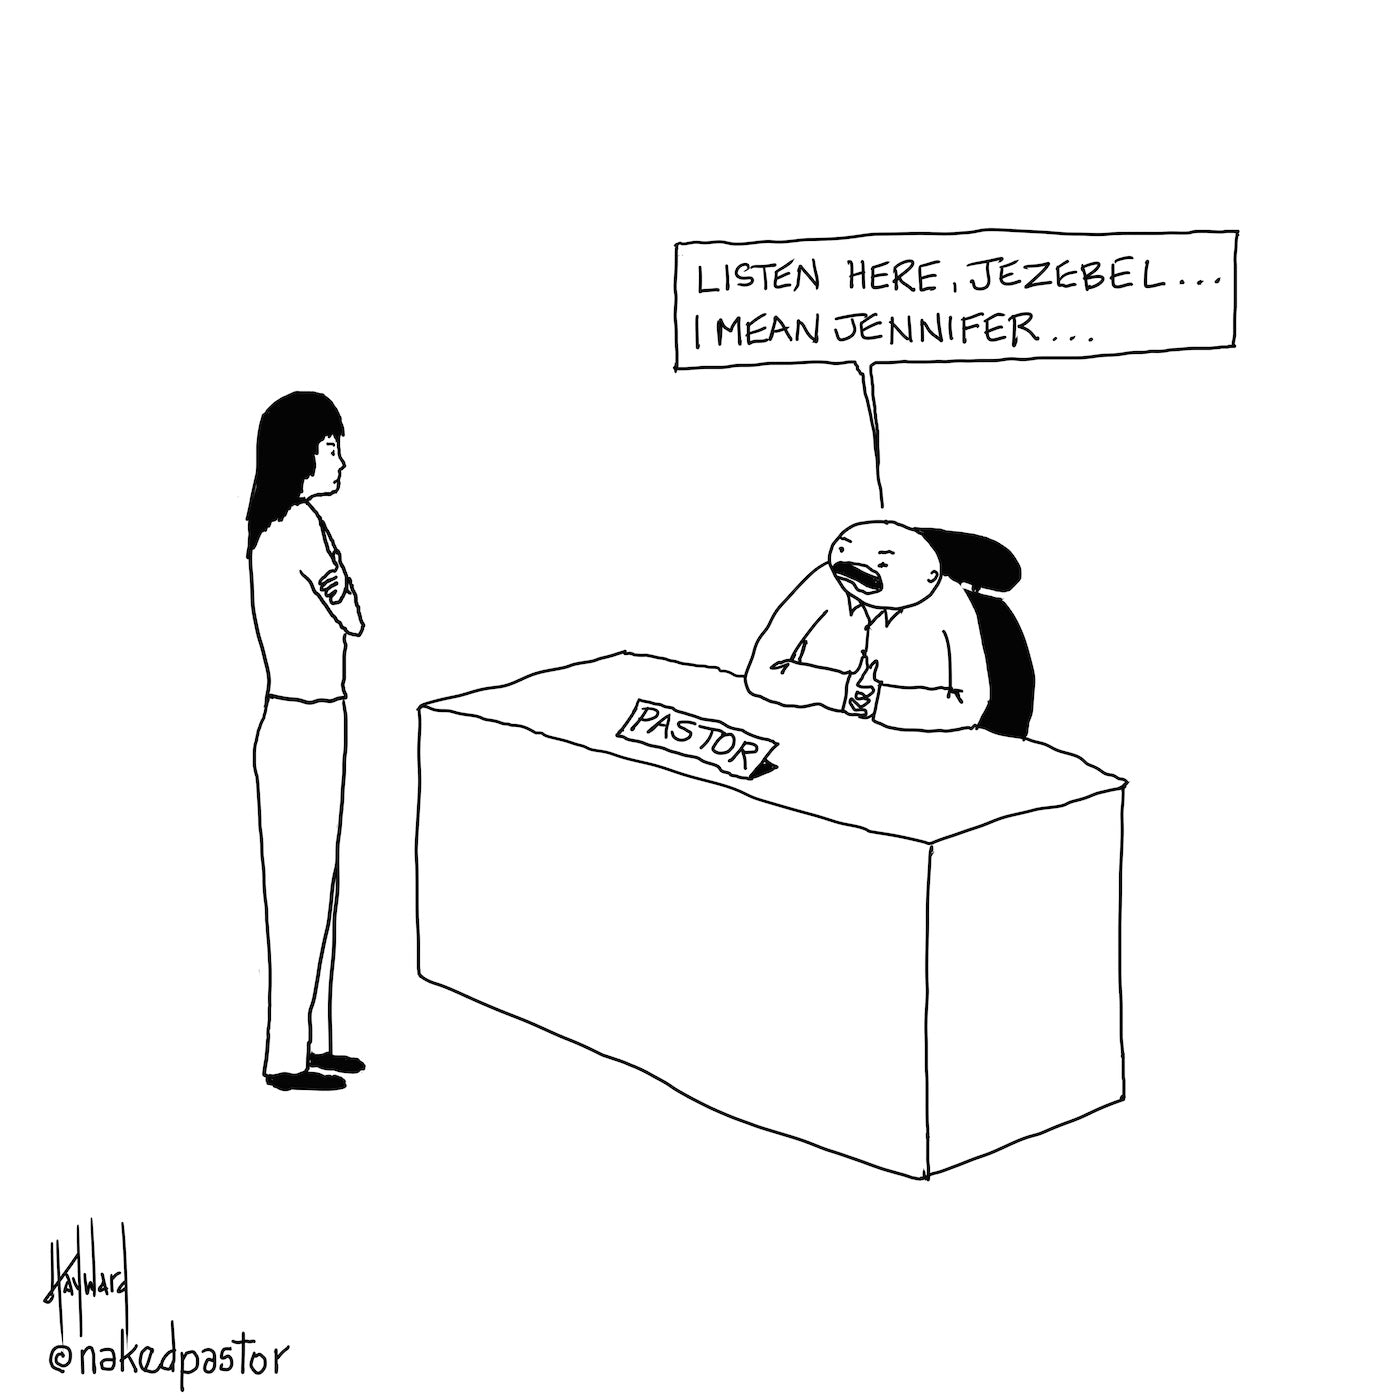 Jezebel Jennifer Digital Cartoon